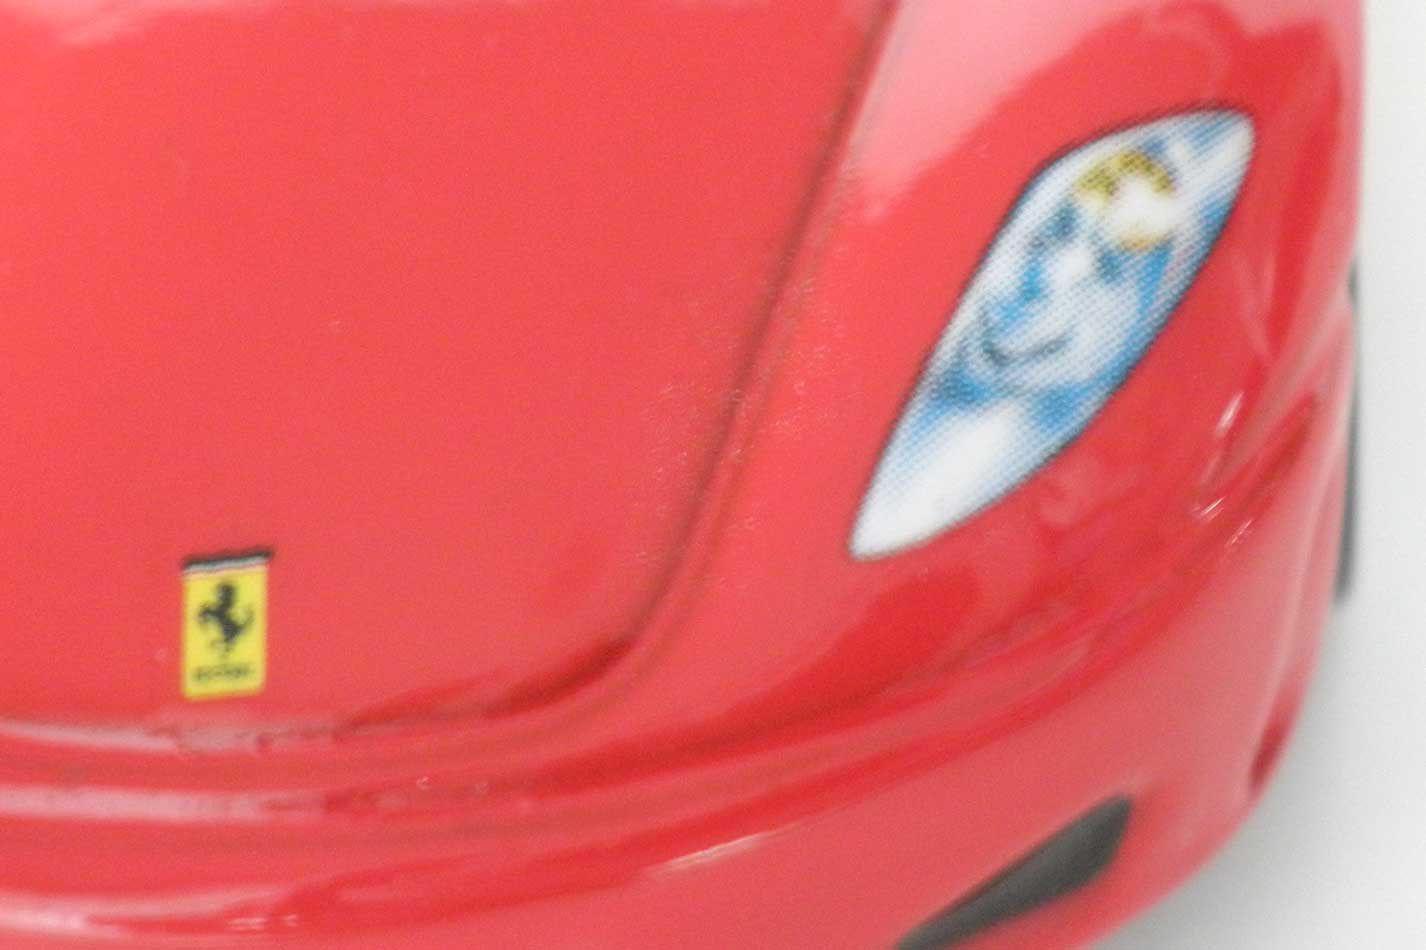 le logo Ferrari du capot est de travers.